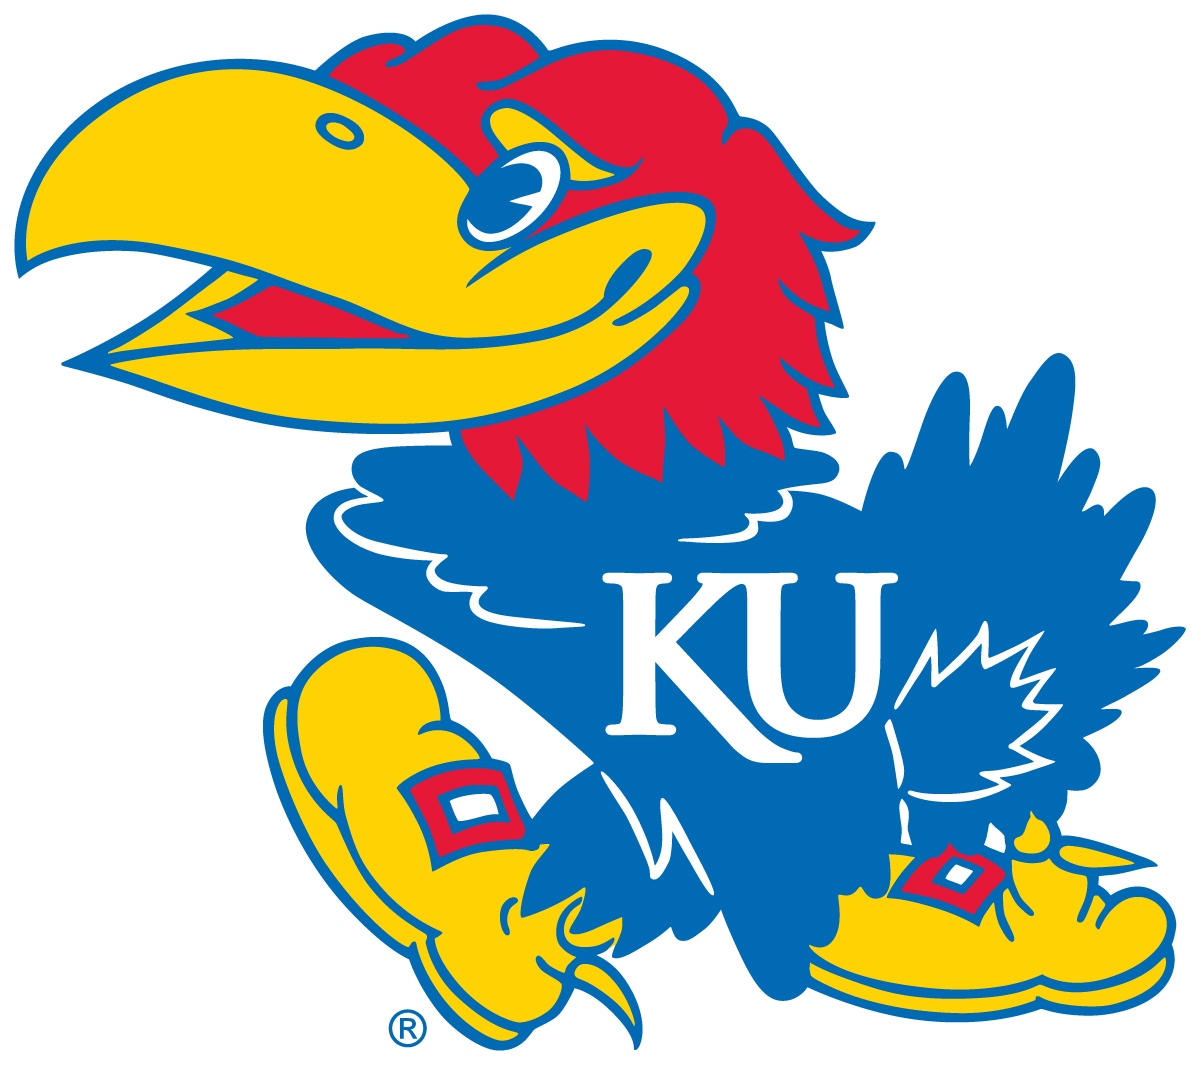 Kansas Jayhawks Logo